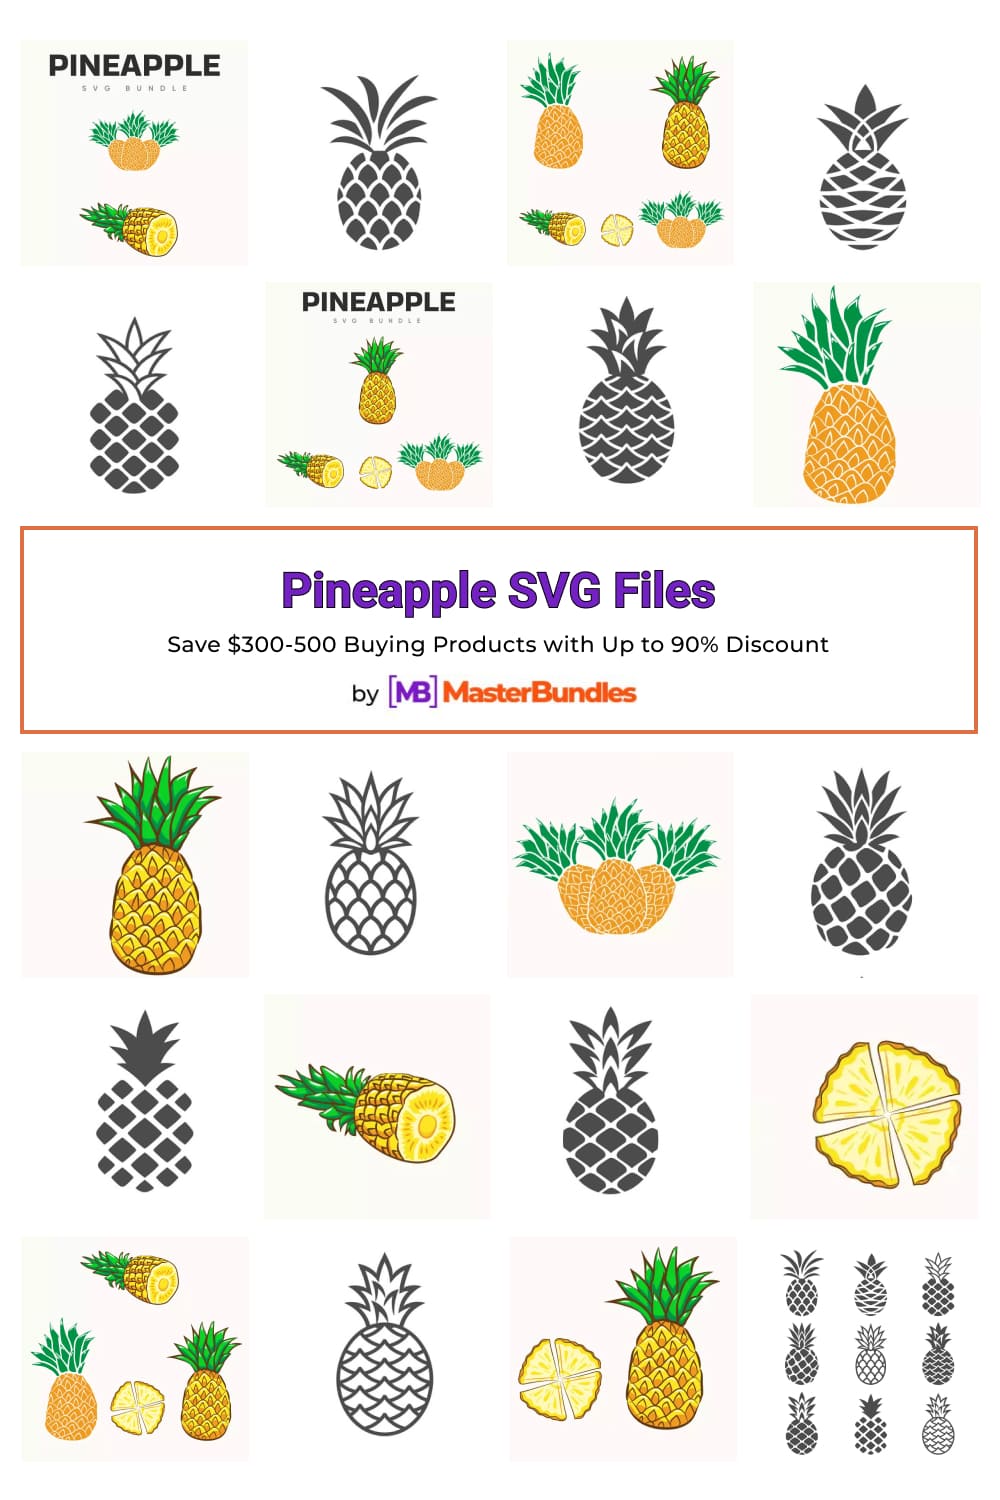 Pineapple SVG Files Pinterest image.